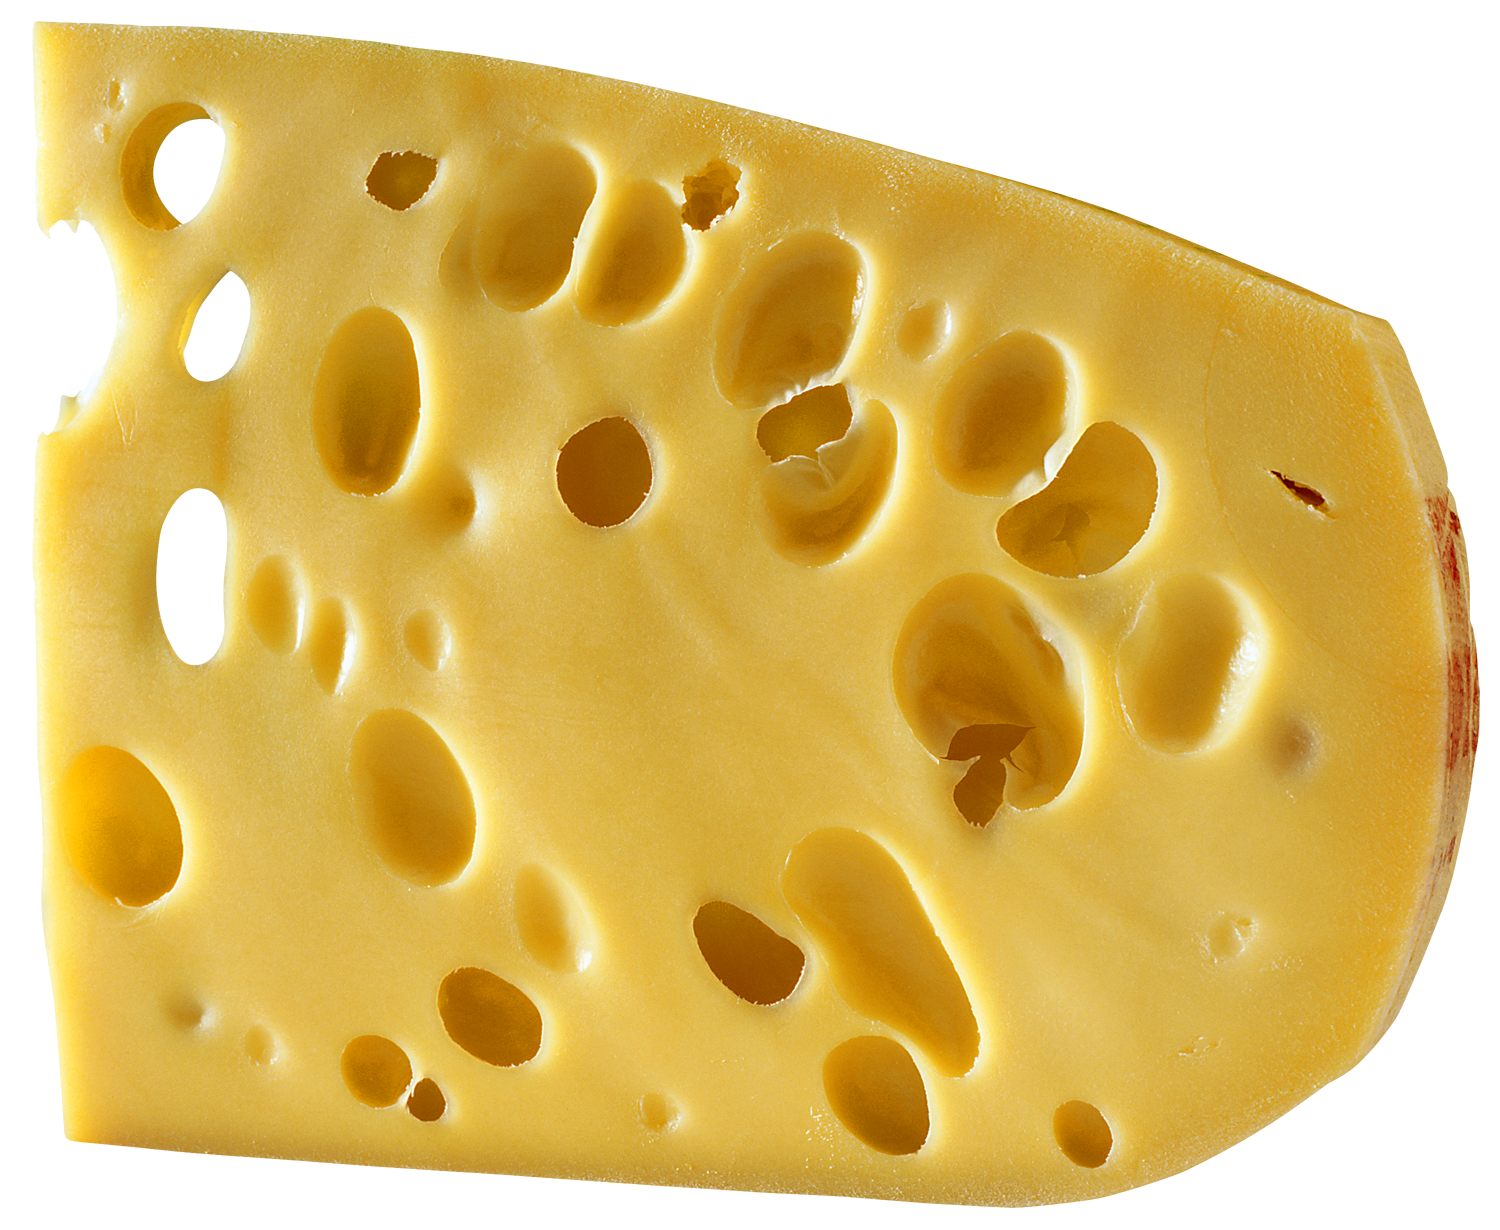 Сыр з дырочками. Сыр Маасдам Swiss. Сыр швейцарский Маасдам. Маасдам Джагибо. Дырки в сыре.